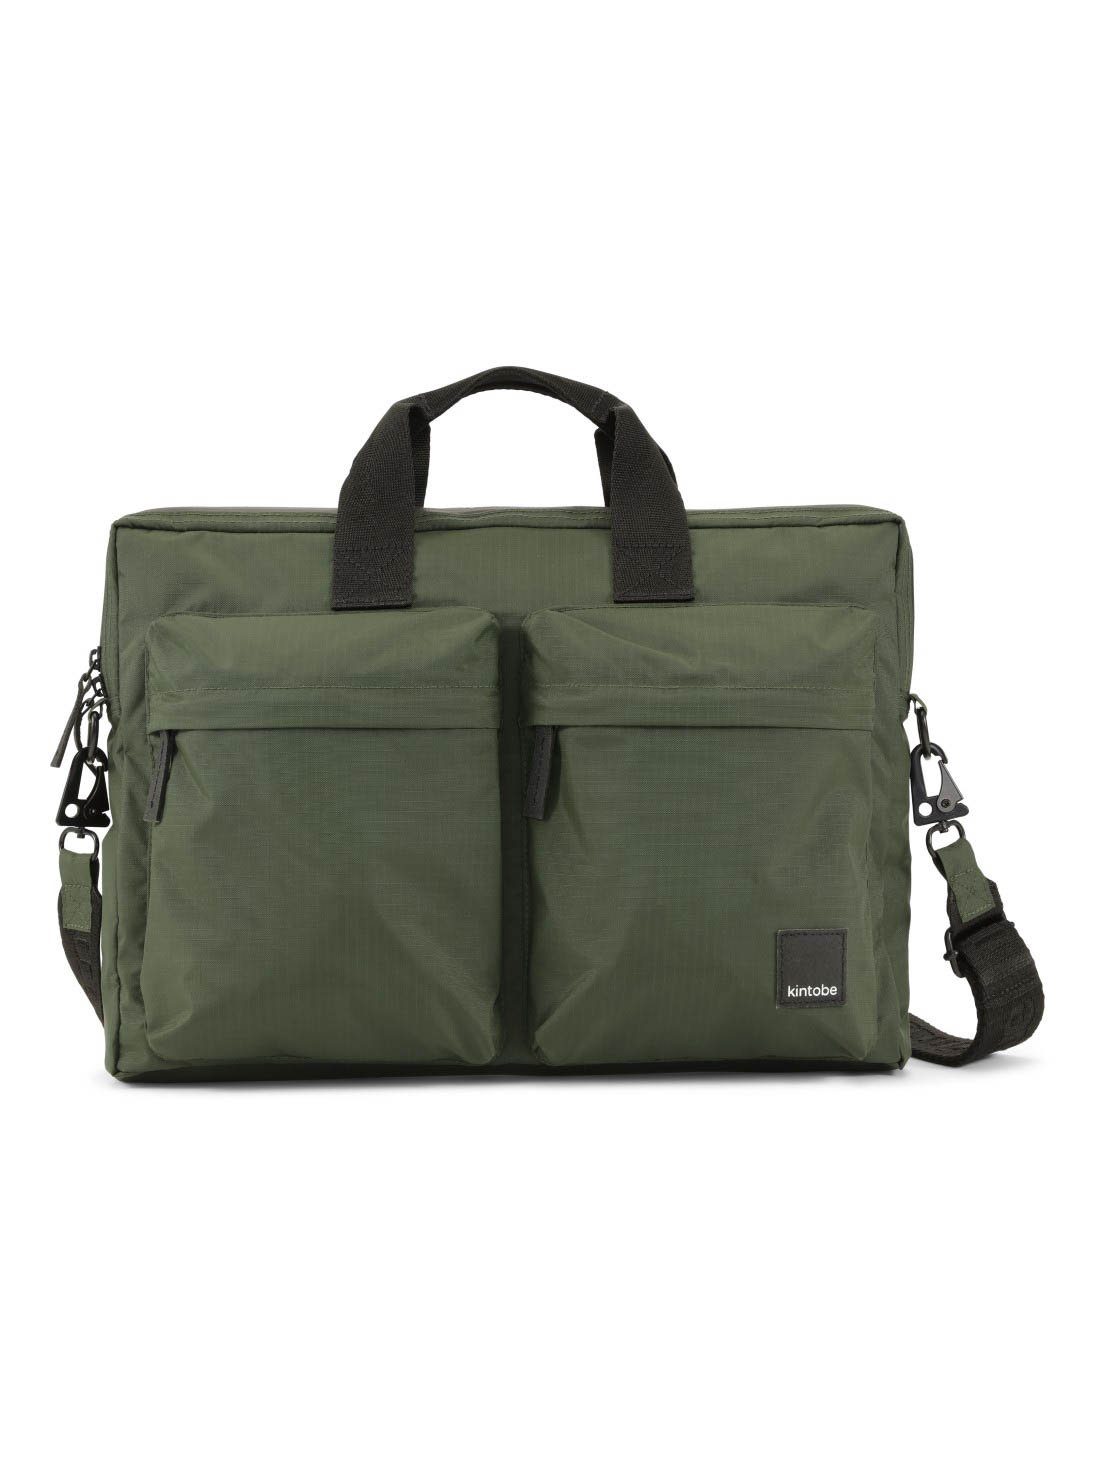 Urban Bag Sage Green kintobe Messenger Messenger Bag